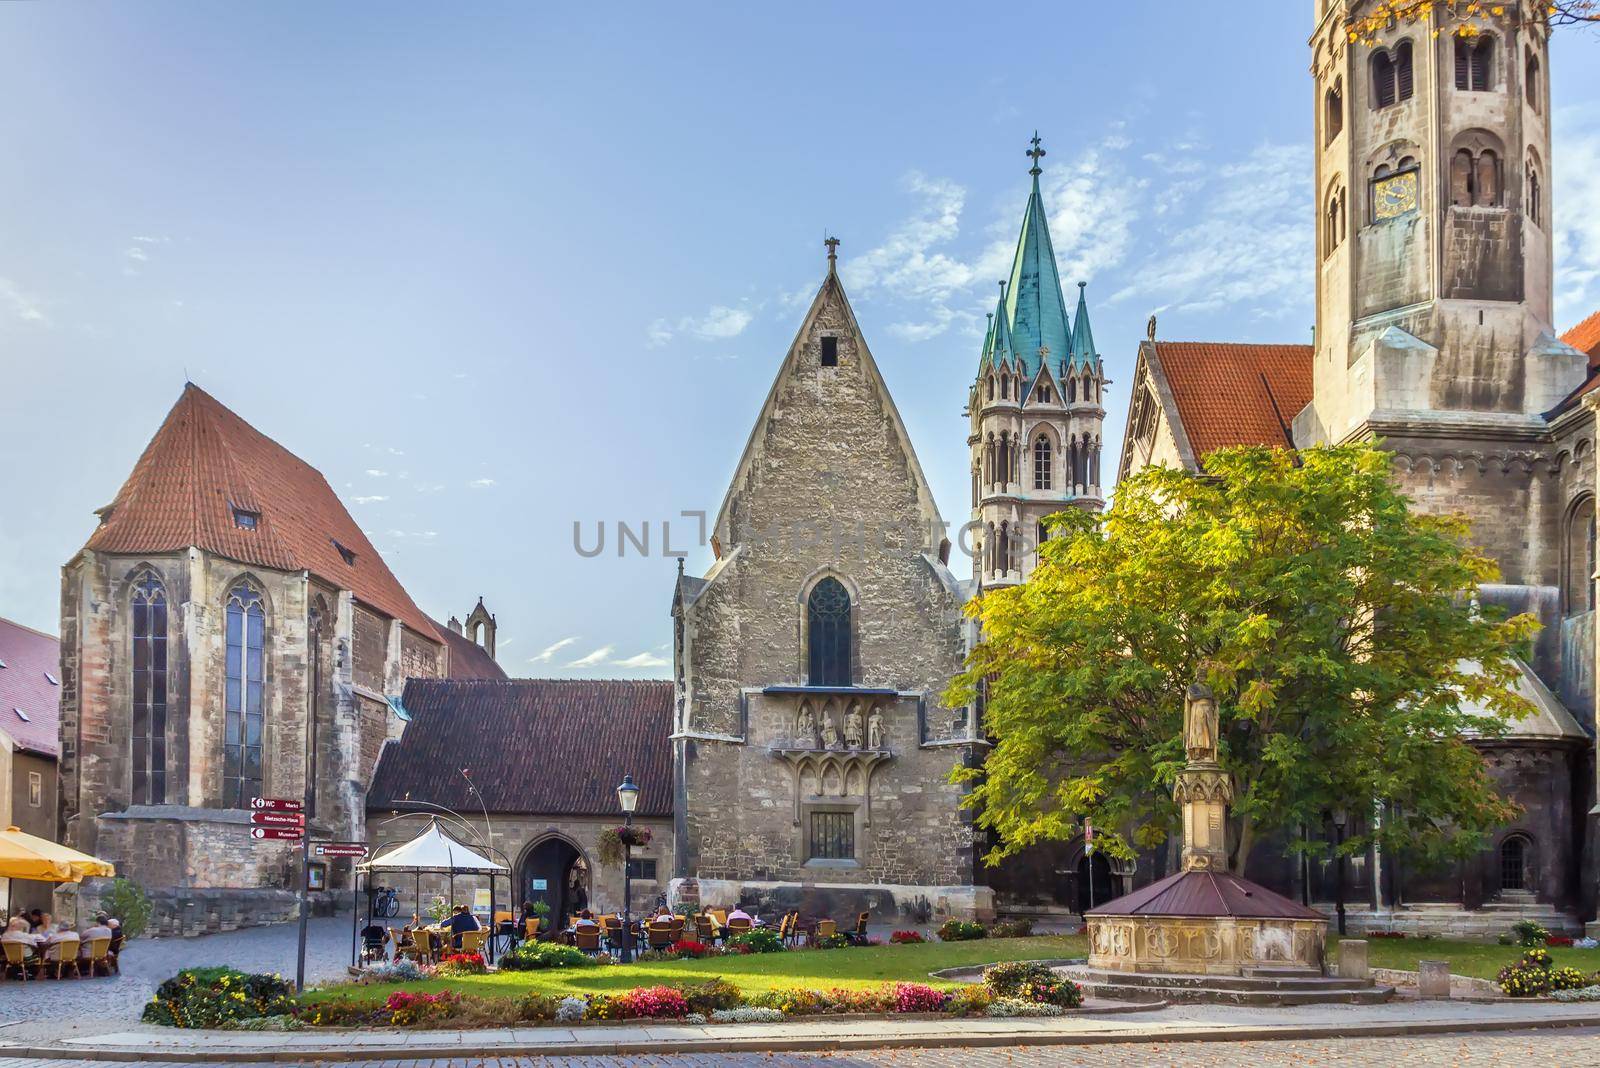 Naumburg Cathedral, Germany by borisb17